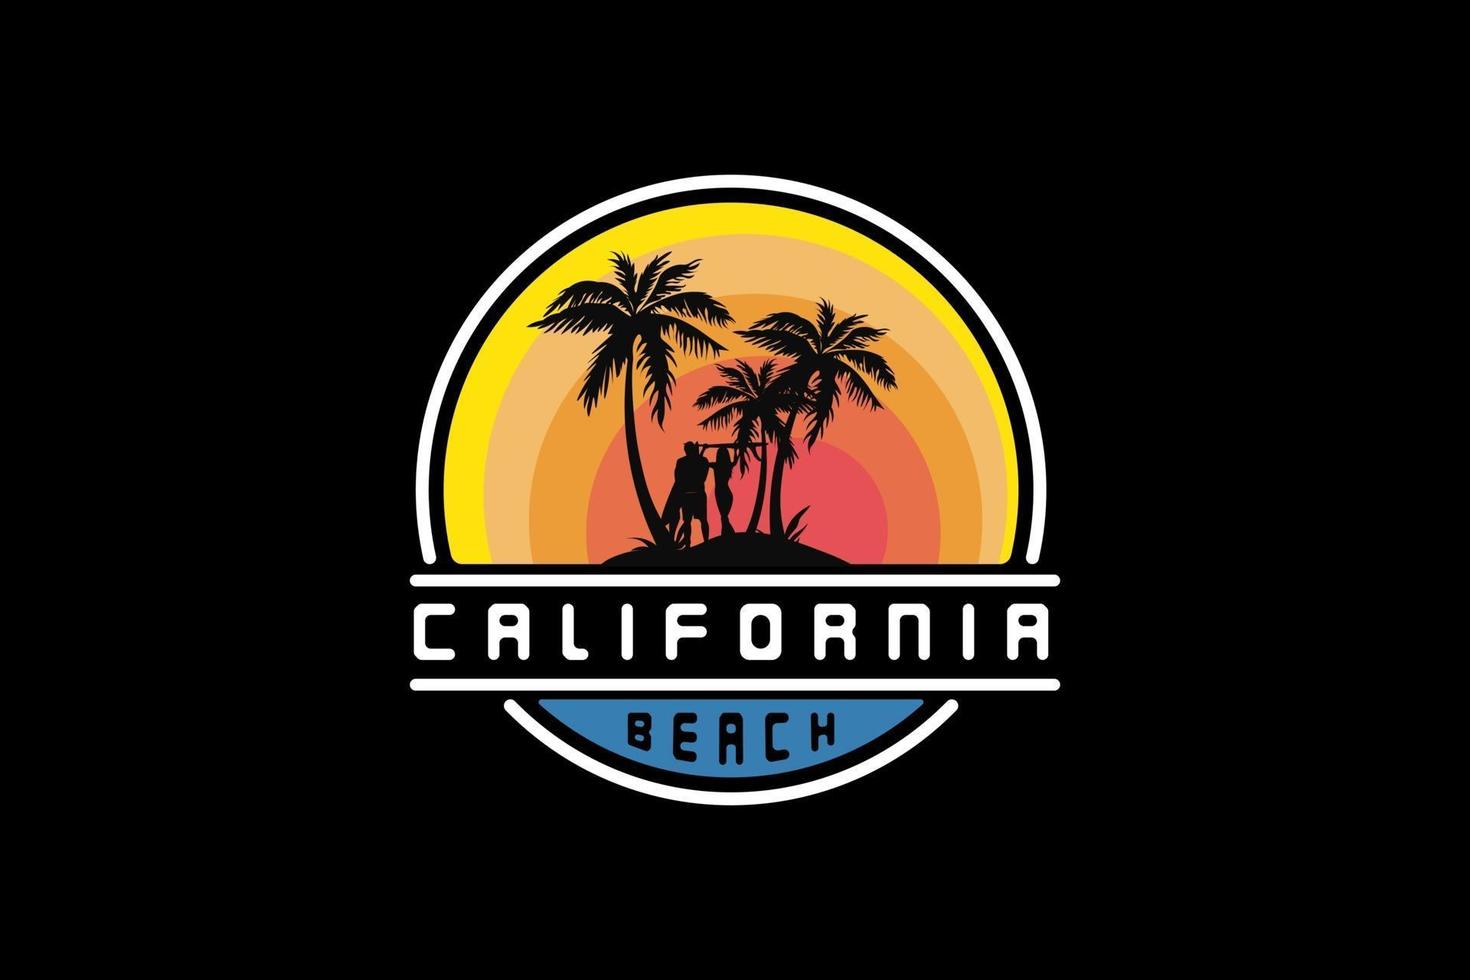 California beach, silhouette retro vintage style vector